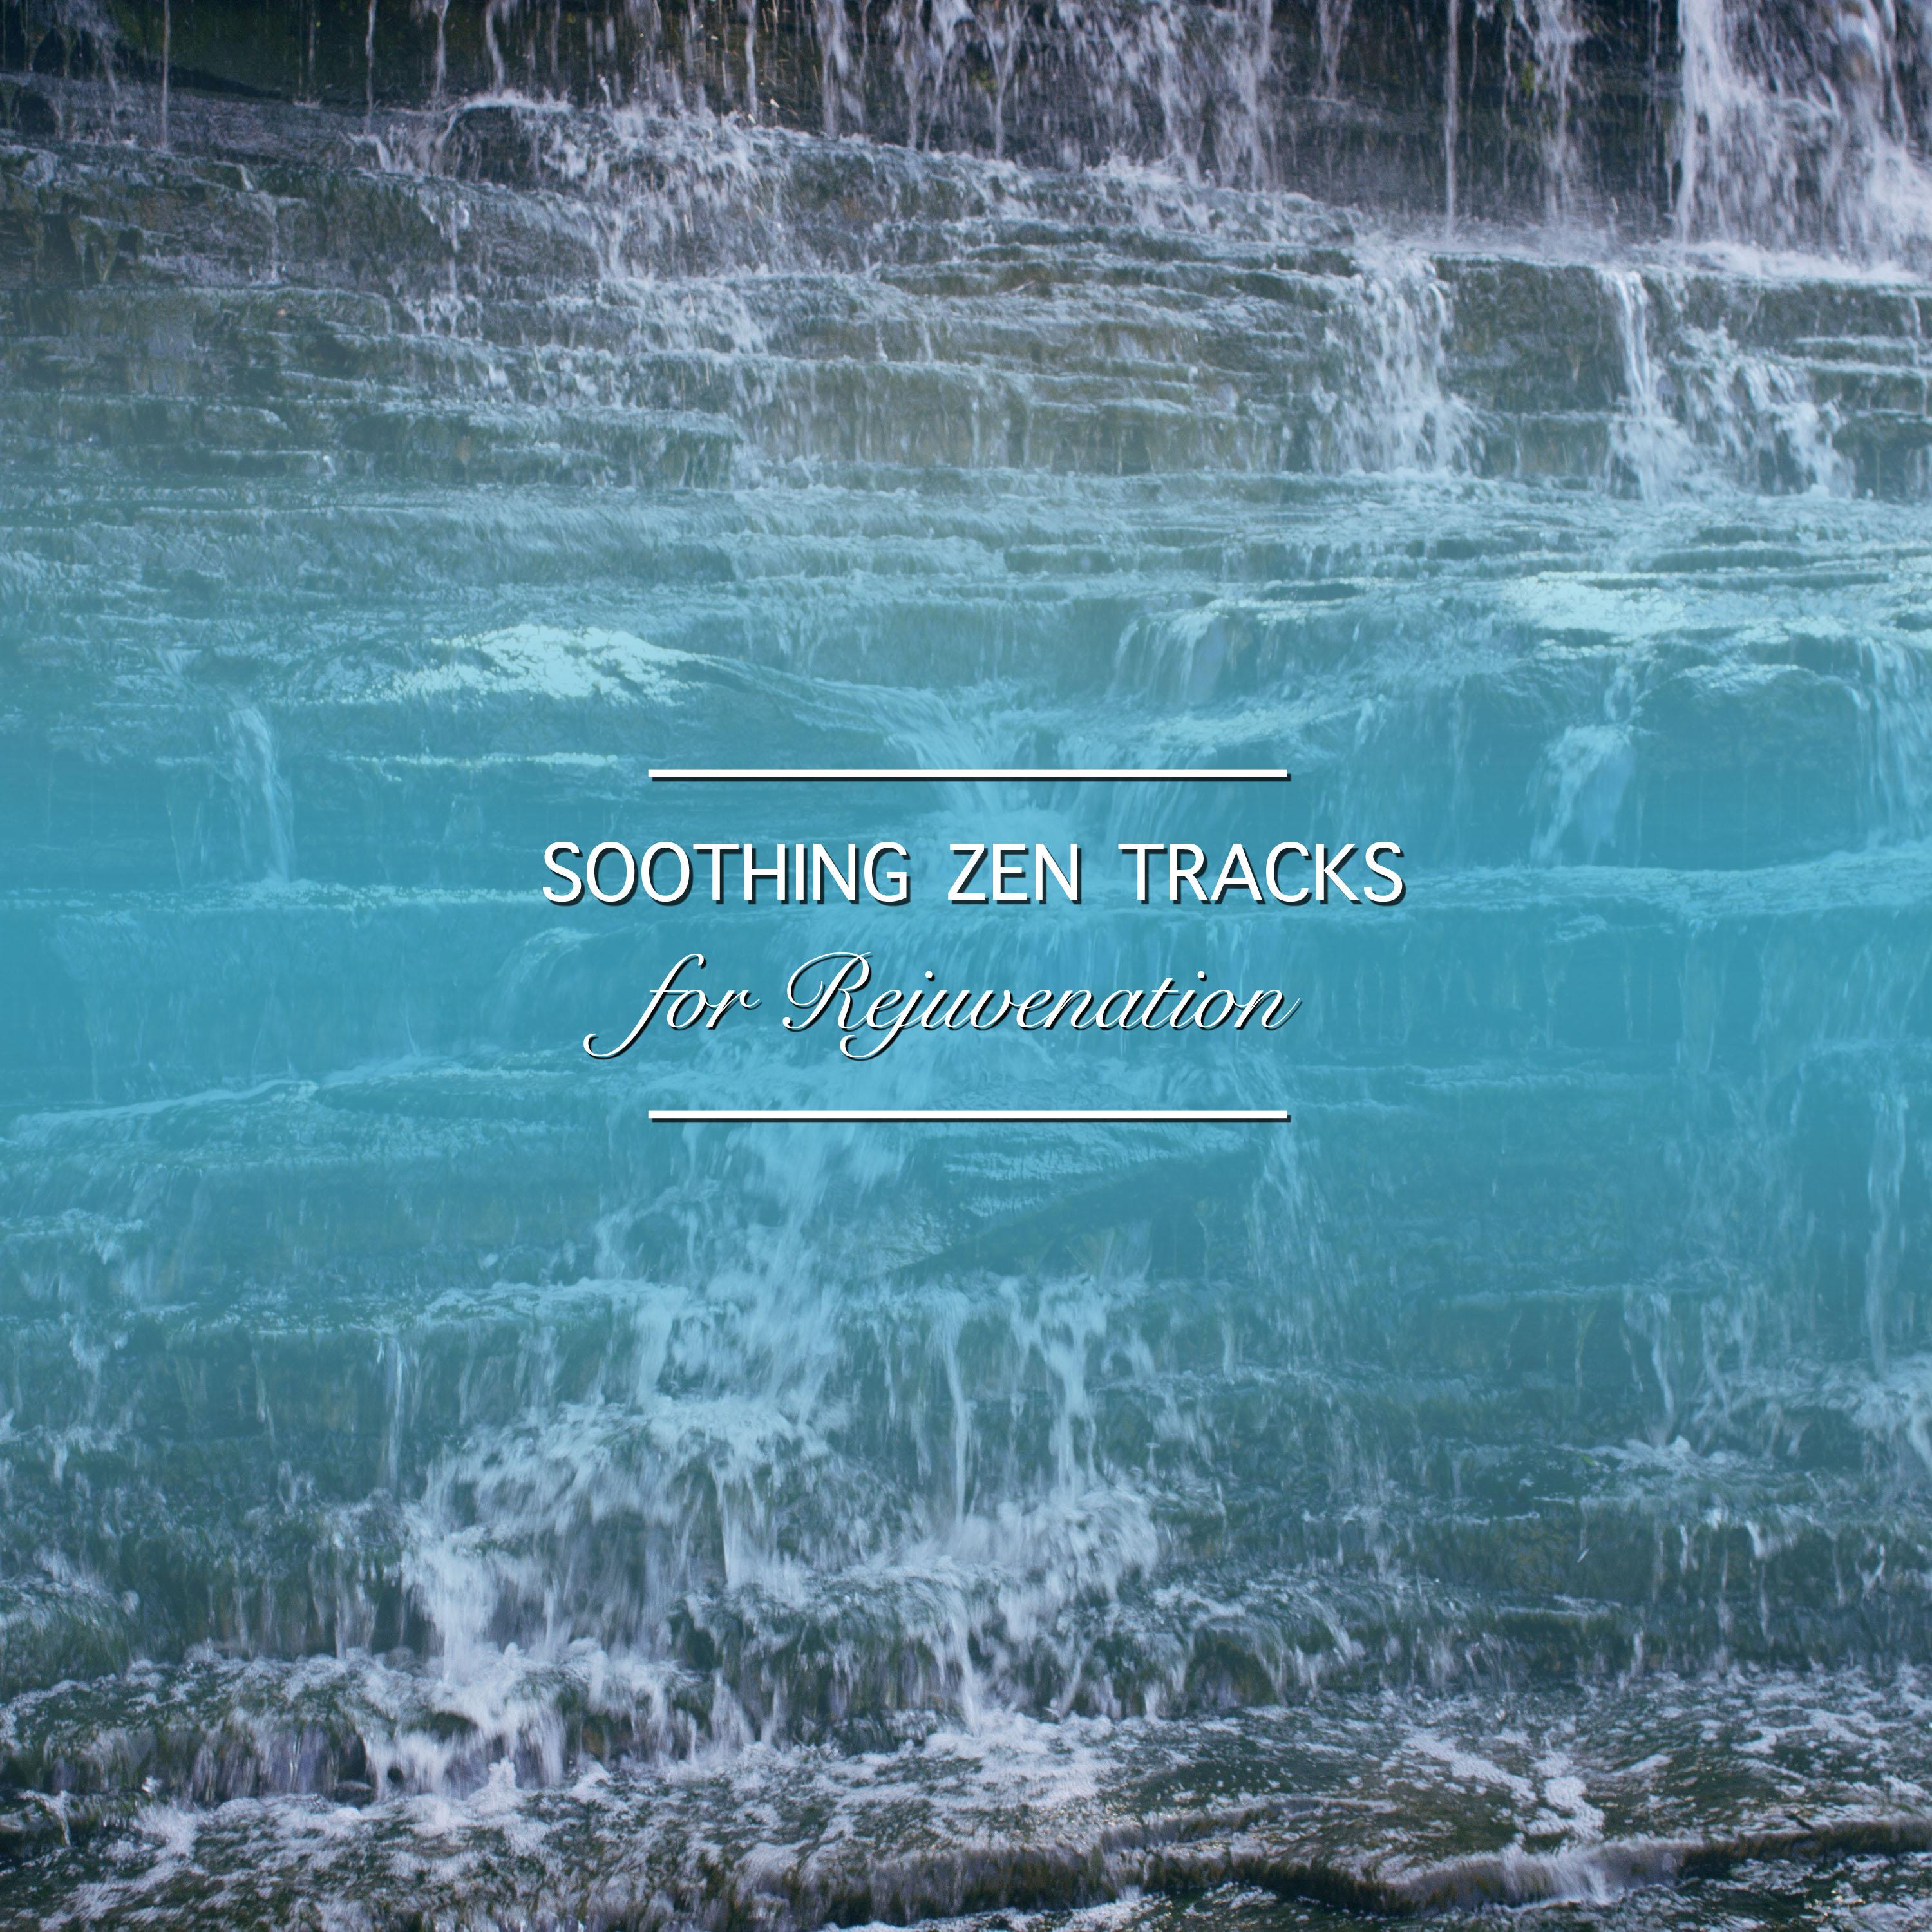 22 Soothing Zen Tracks for Rejuvenation